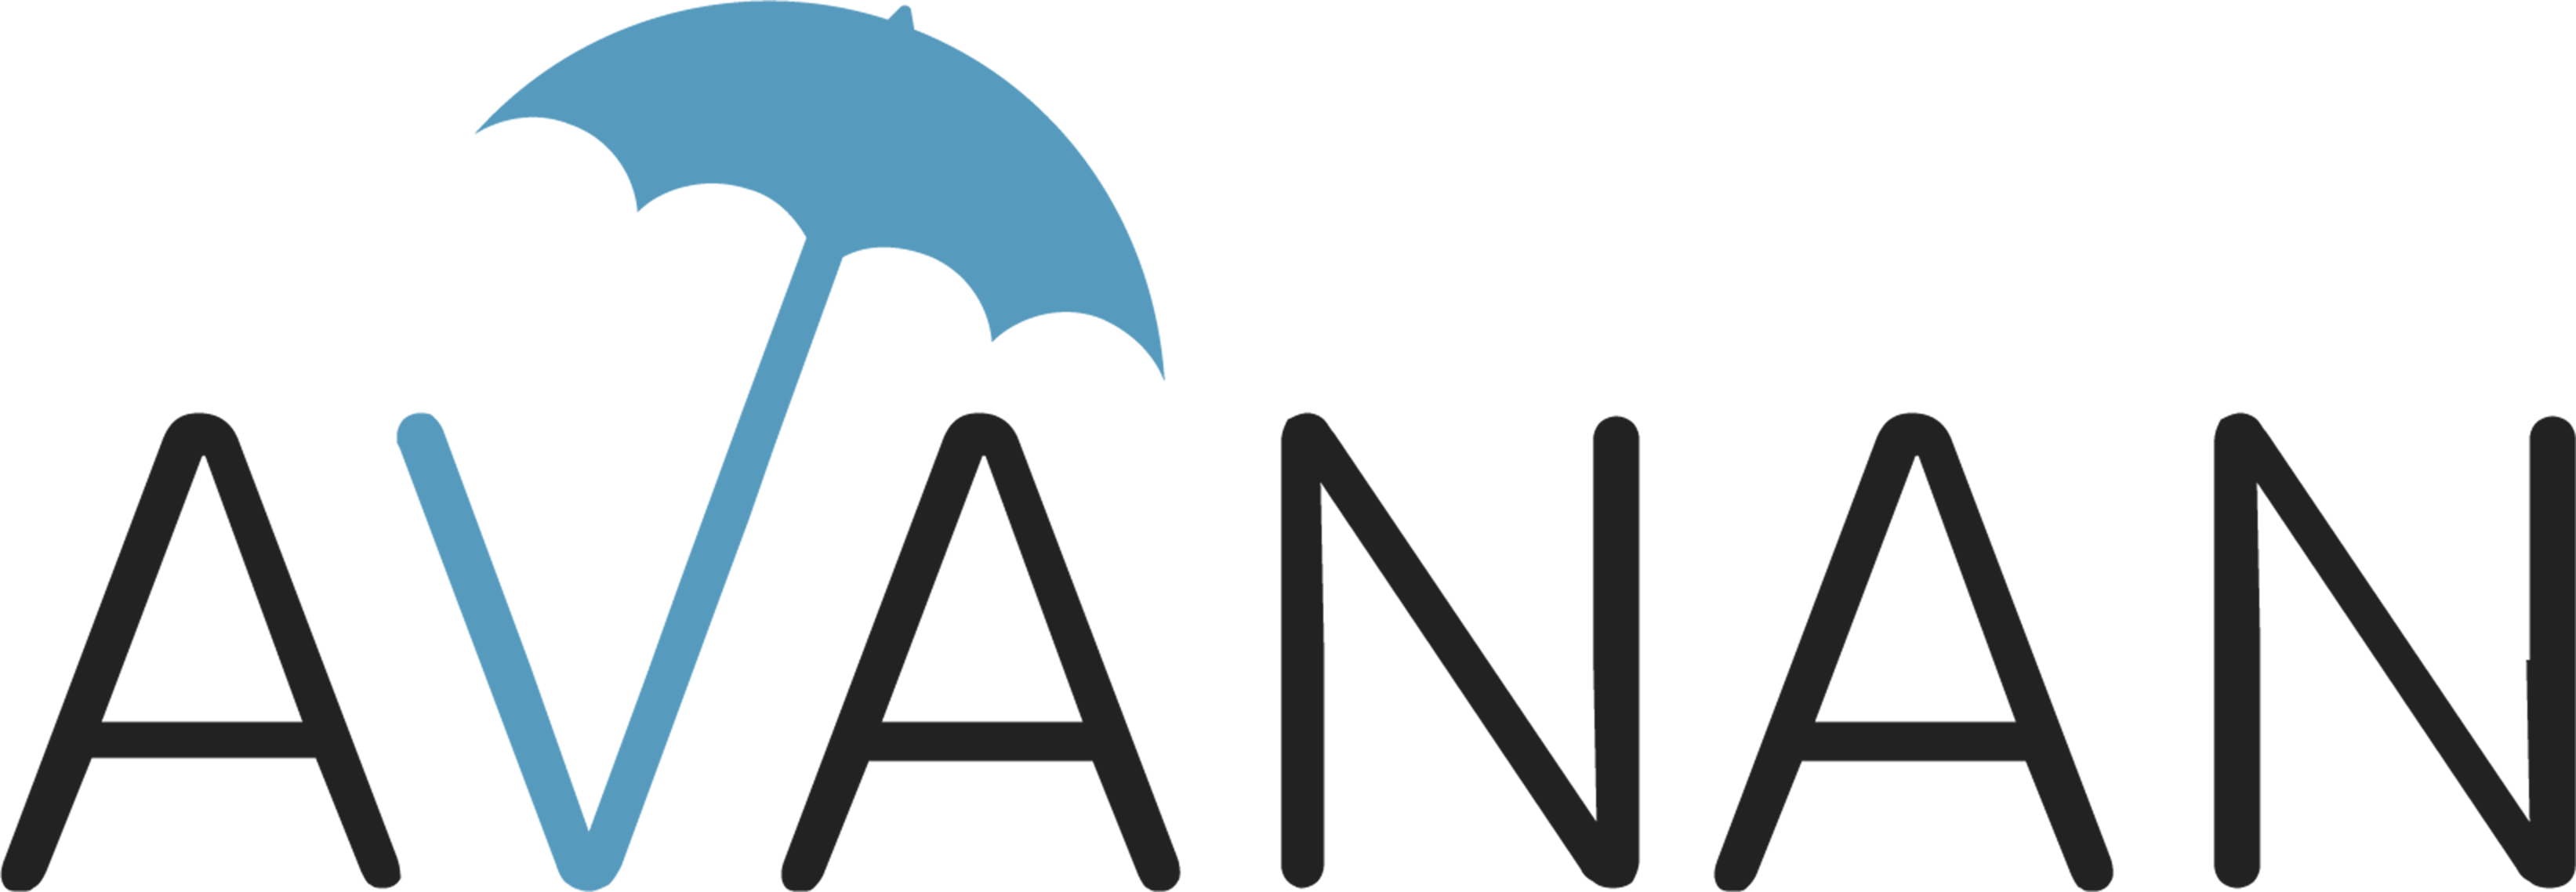 Avanan logo